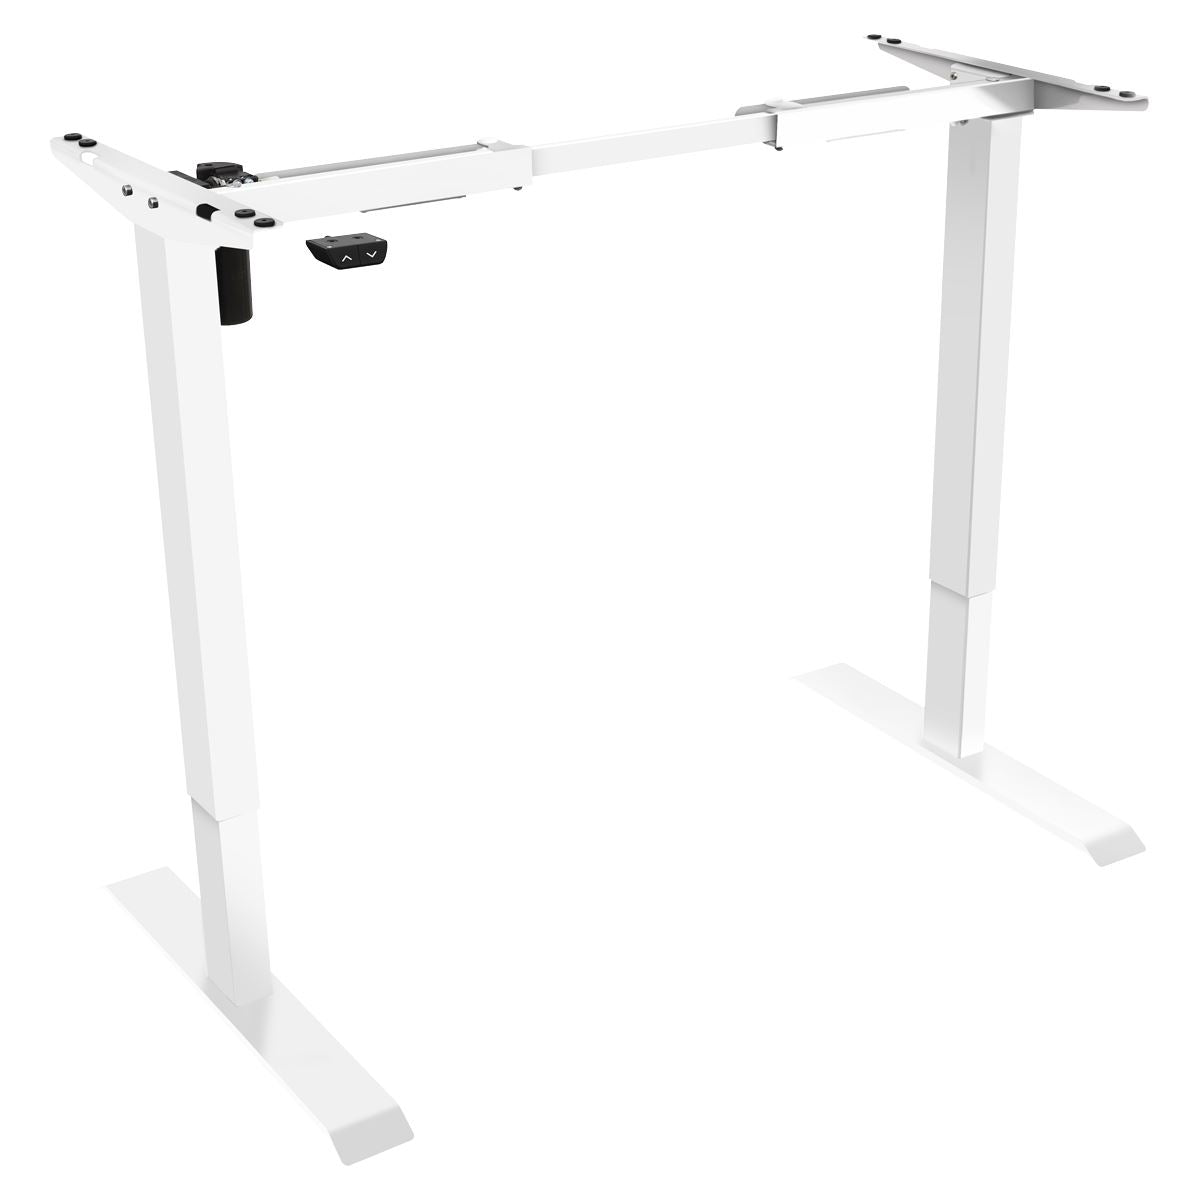 Dellonda Electric Adjustable Standing Desk Frame, 70kg Capacity, White, Quiet